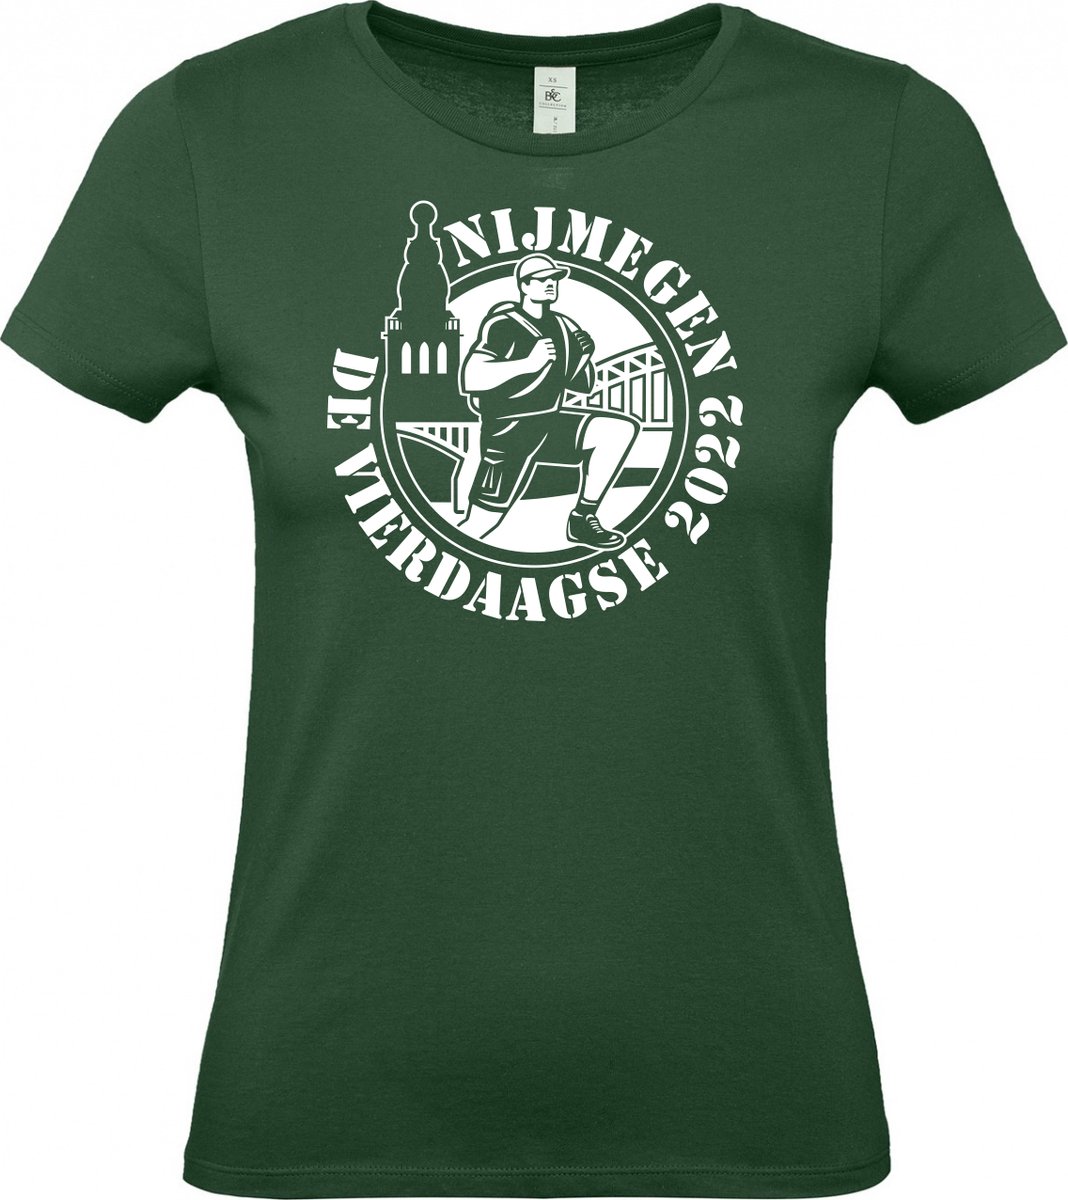 Dames t-shirt CartoonShirt De Vierdaagse |Wandelvierdaagse | Vierdaagse Nijmegen | Roze woensdag | Groen | maat XL